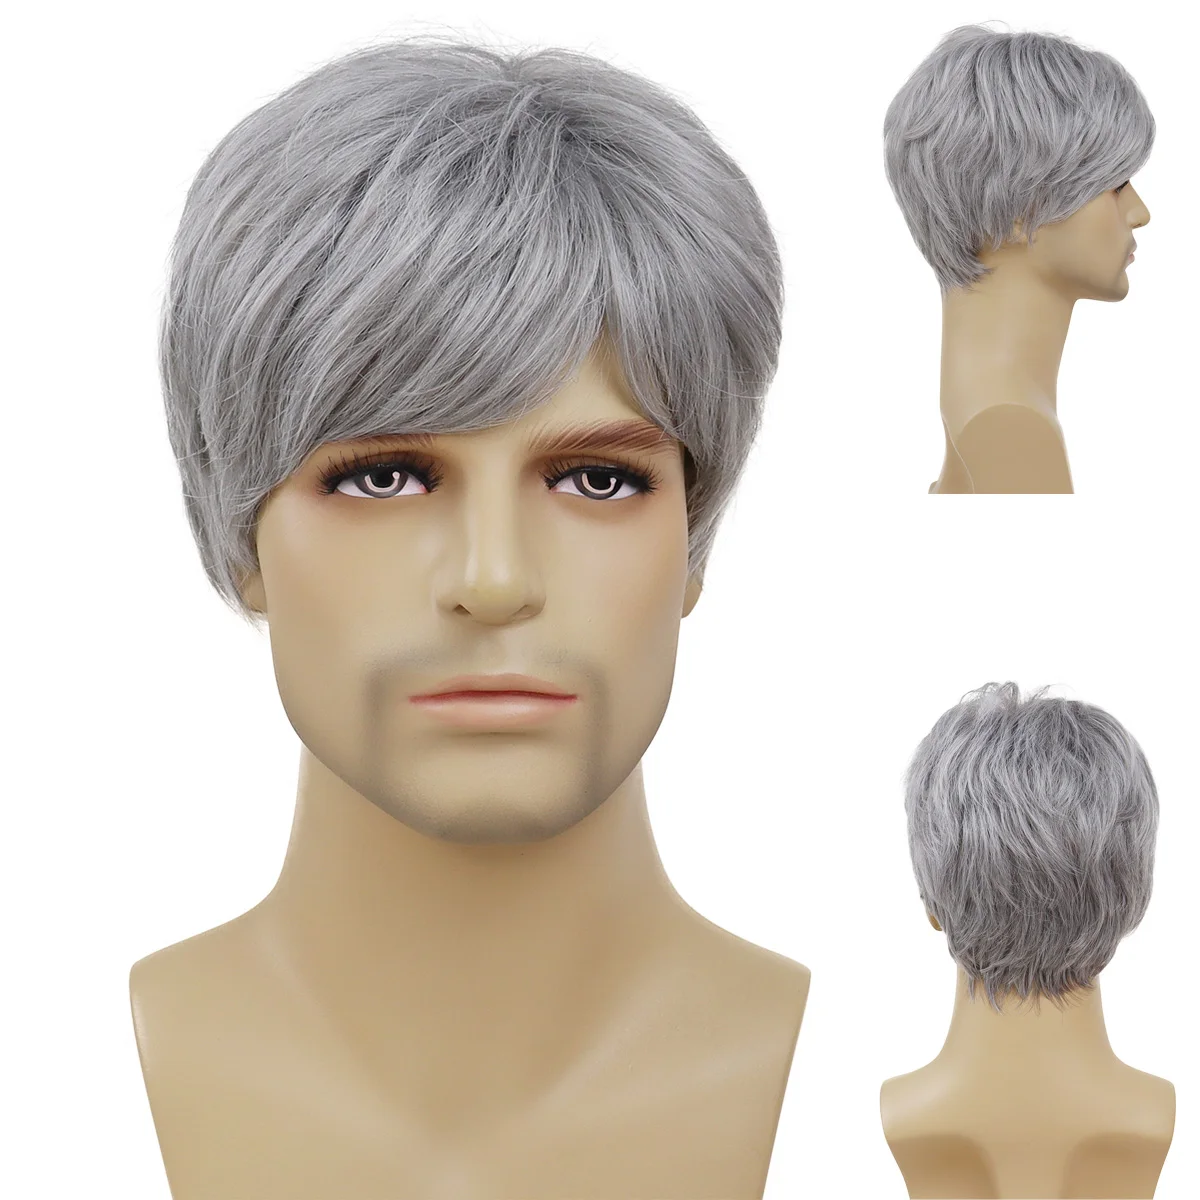 

GNIMEGIL Synthetic Short Men Wig Cosplay Silver Grey Wig with Bangs Korean Male Hair Hairstyle Grandpa Halloween Costume Wigs